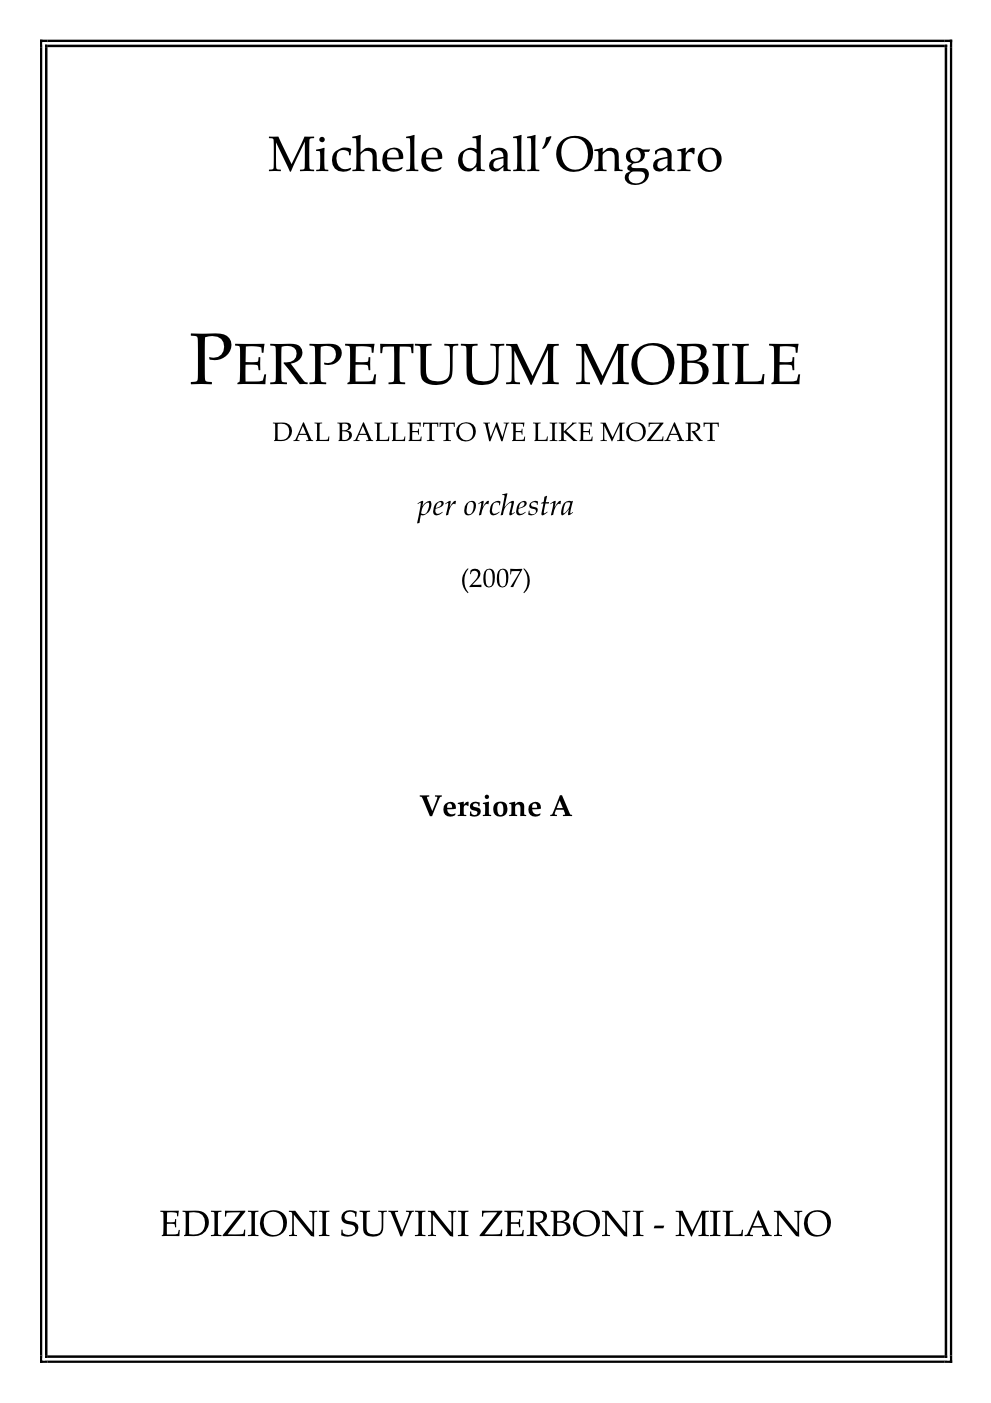 Perpetuum mobile_versione A_per orchestra_Dall Ongaro 1